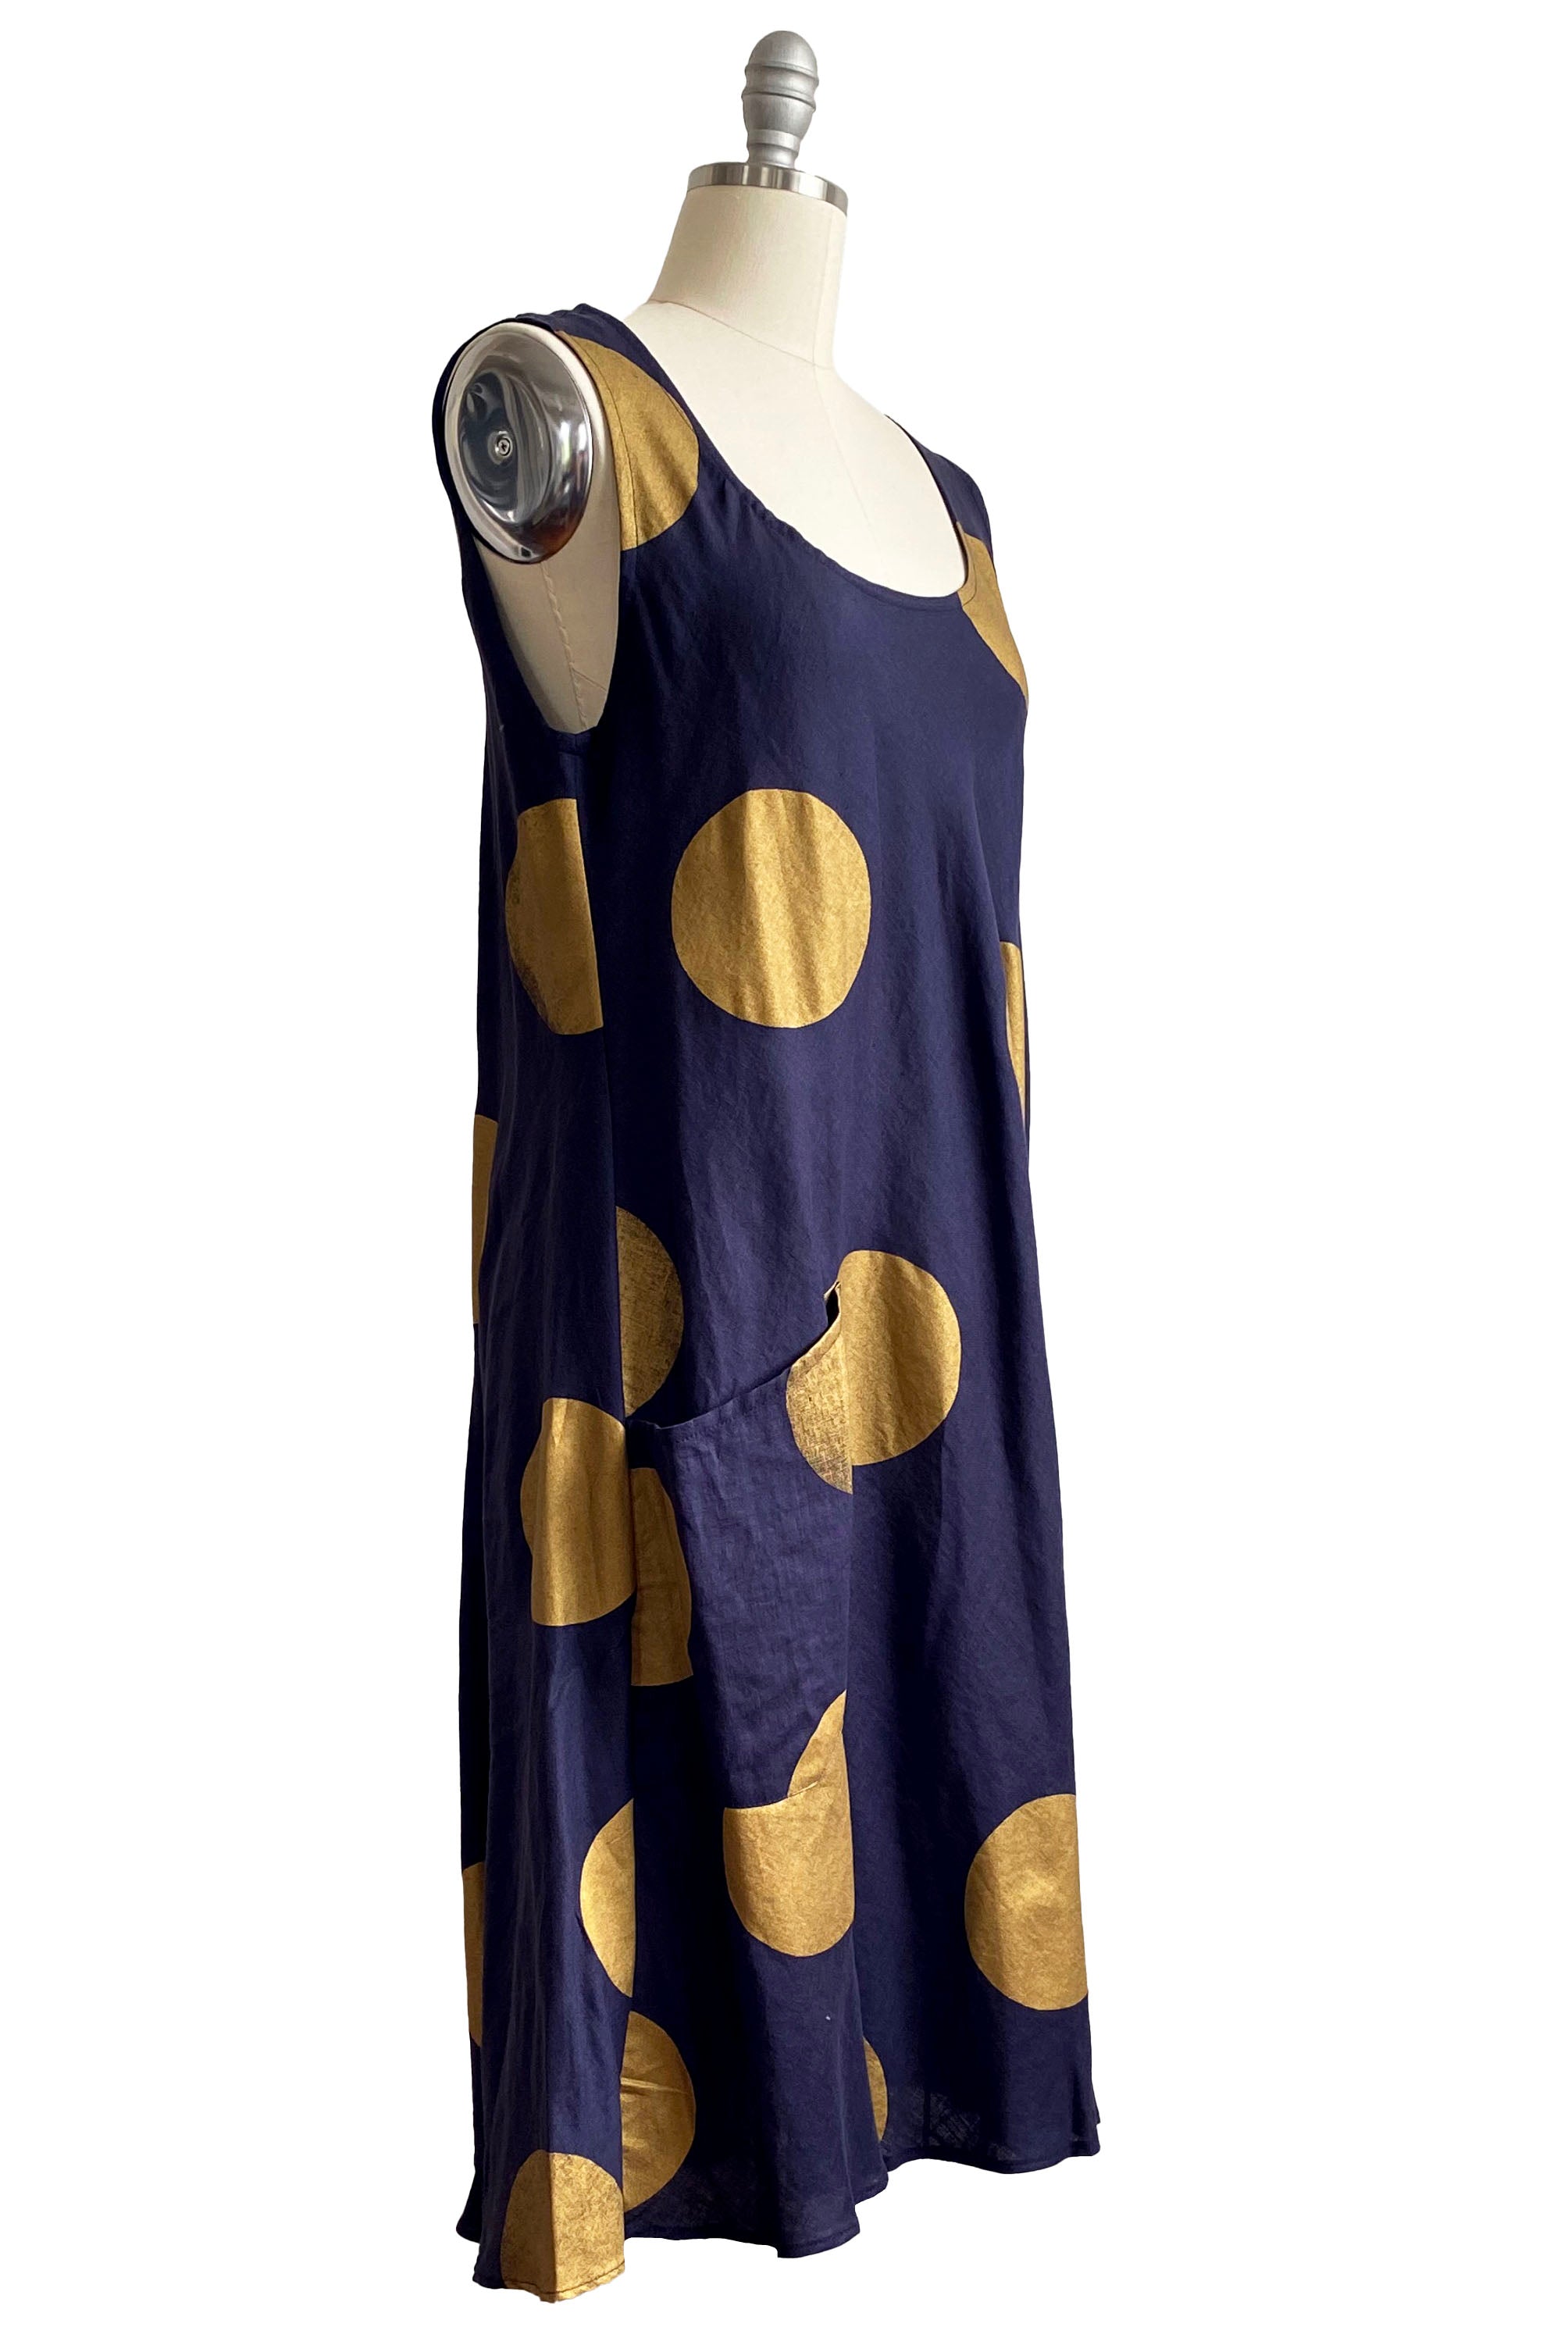 Emilia Dress w/ Dot Print - Navy & Gold - Medium